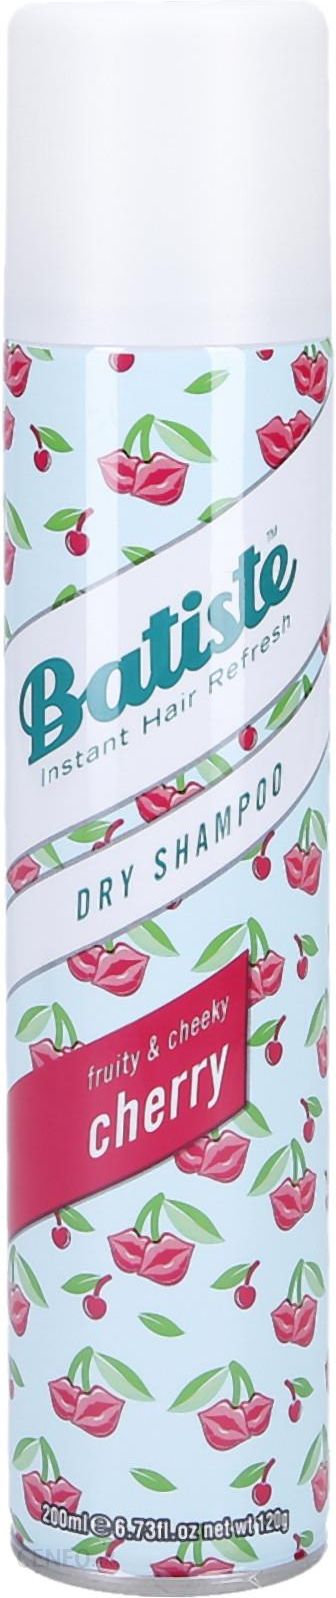 batiste dry suchy szampon cherry 200ml